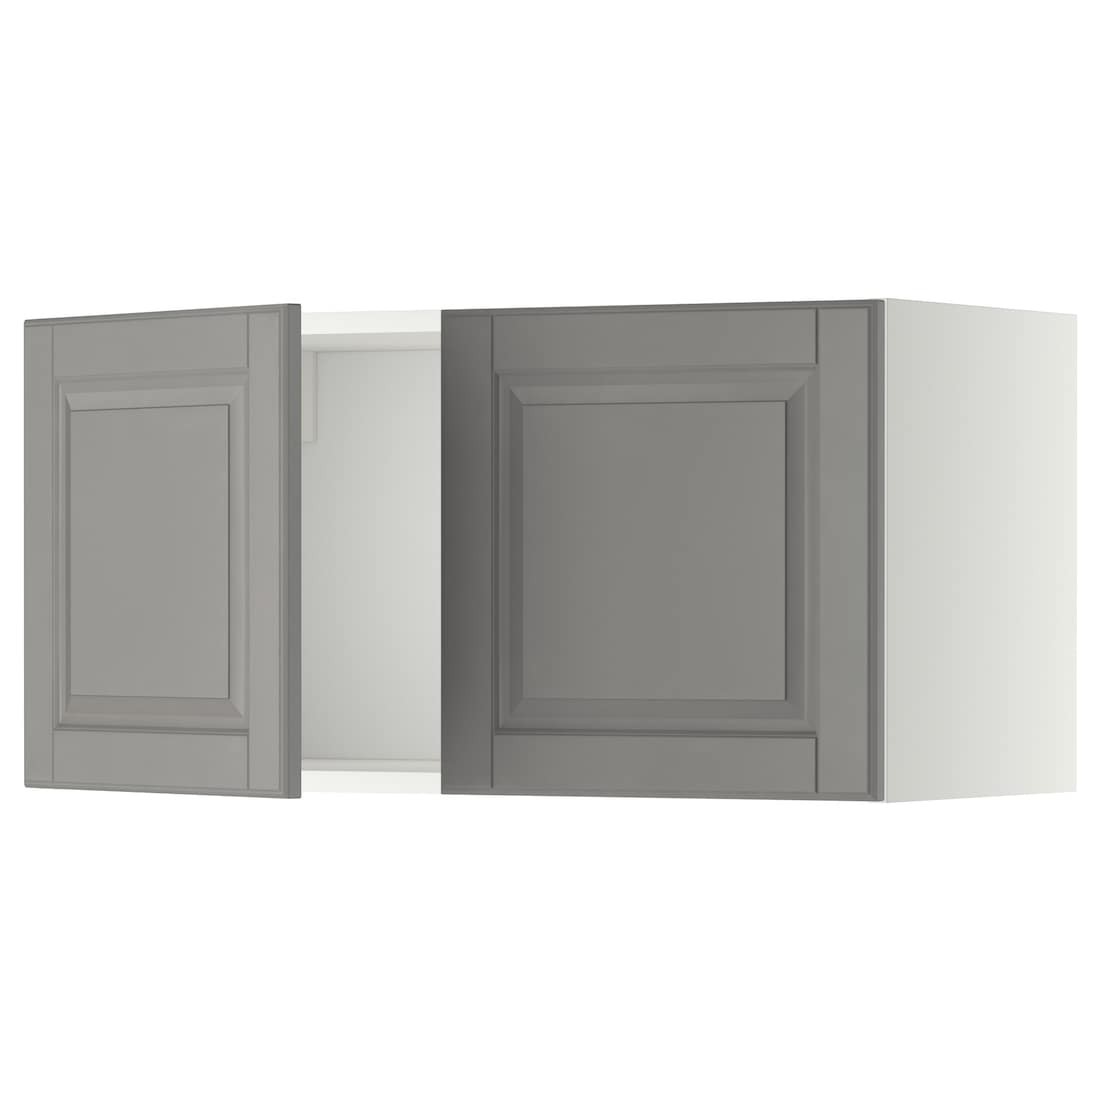 IKEA METOD МЕТОД Навесной шкаф с 2 дверями, белый / Bodbyn серый, 80x40 см 59457945 | 594.579.45